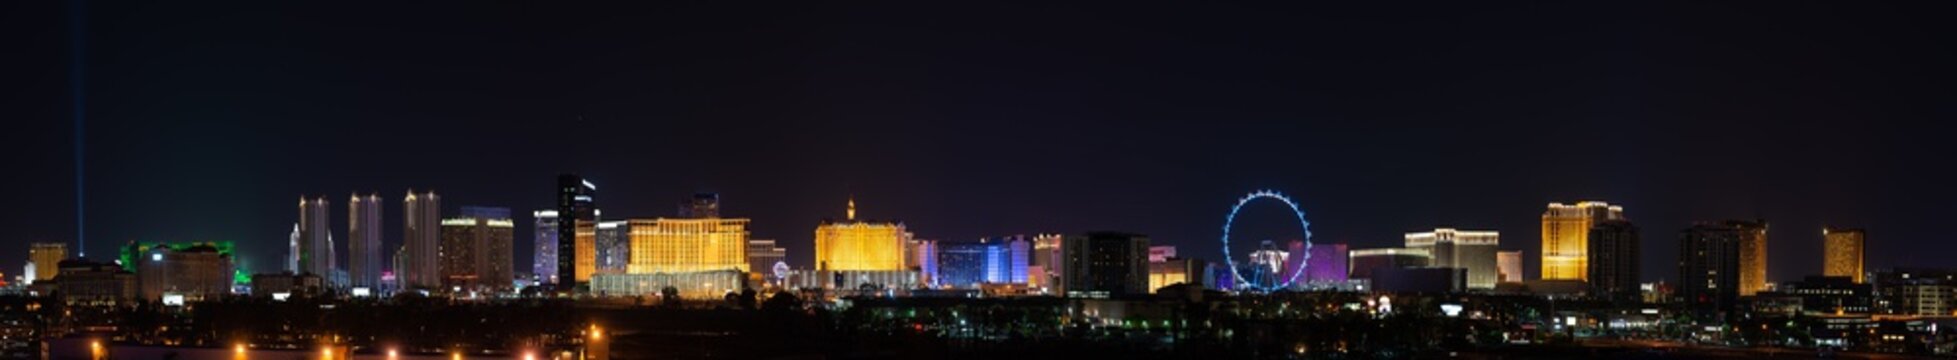 Ultrawide Las Vegas City Lights Skyline Panoramic Panorama of the strip casinos and hotels